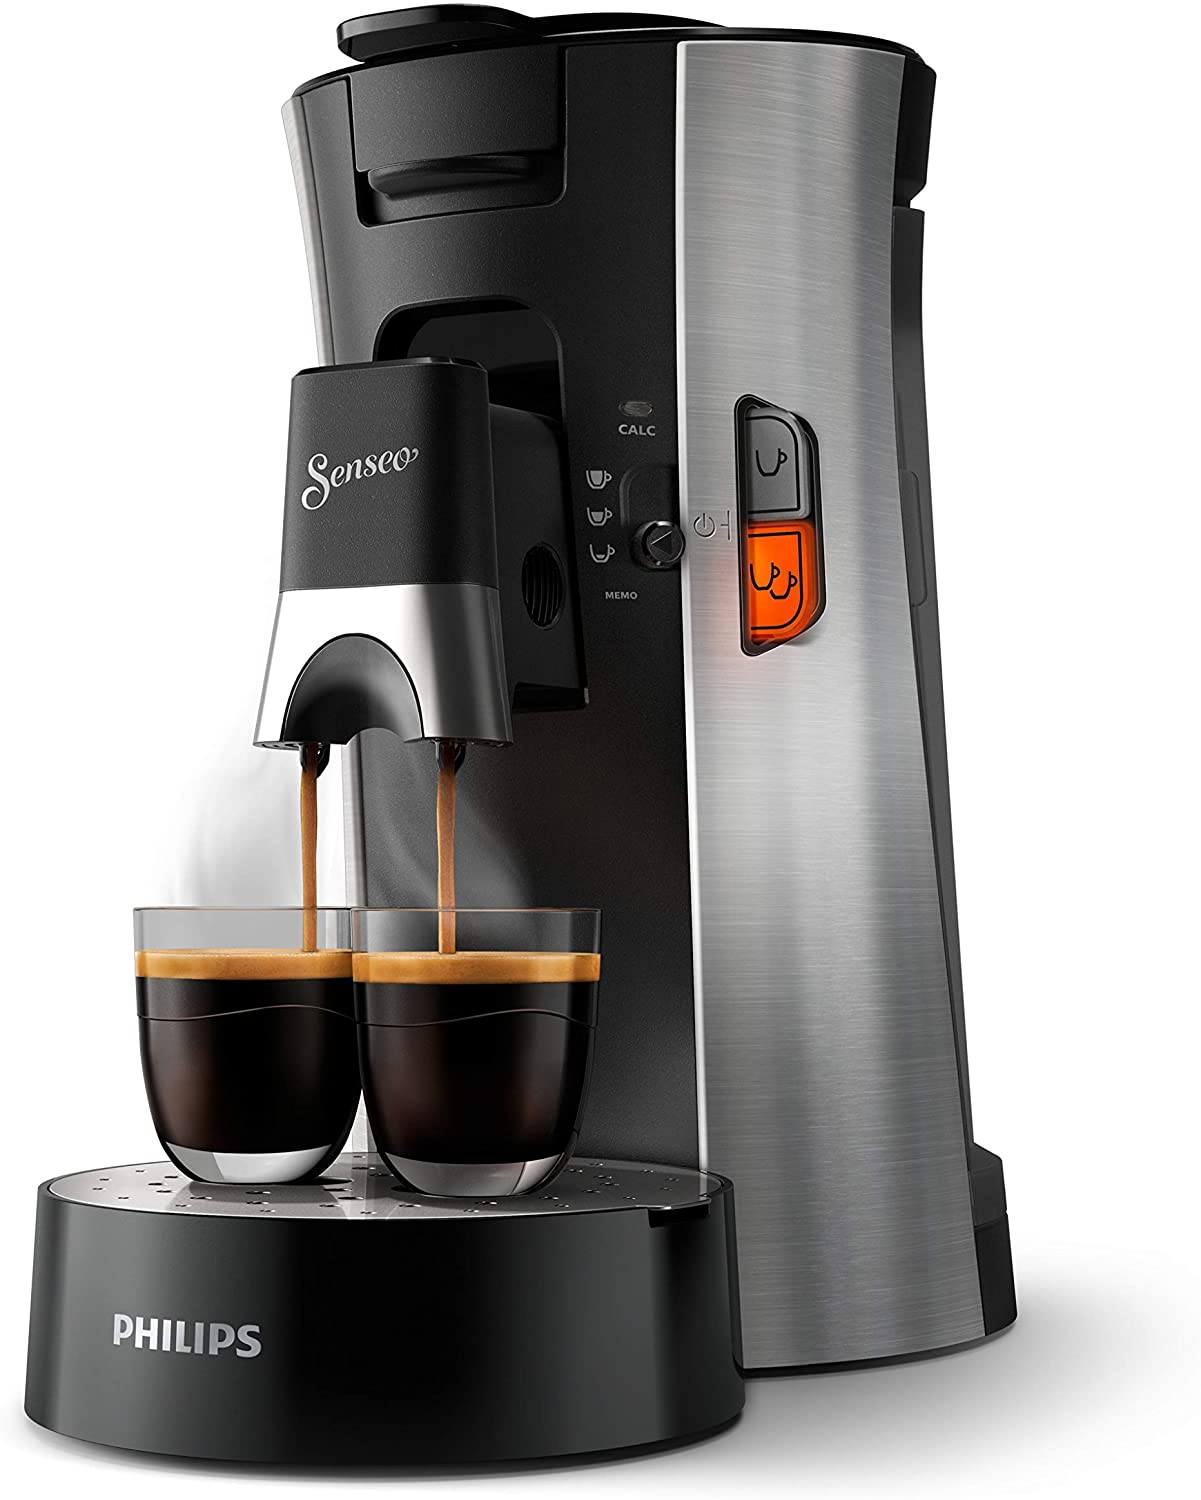 Philips SENSEO Coffee Machine Compatible with All SENSEO Machines 1  descaler kit 